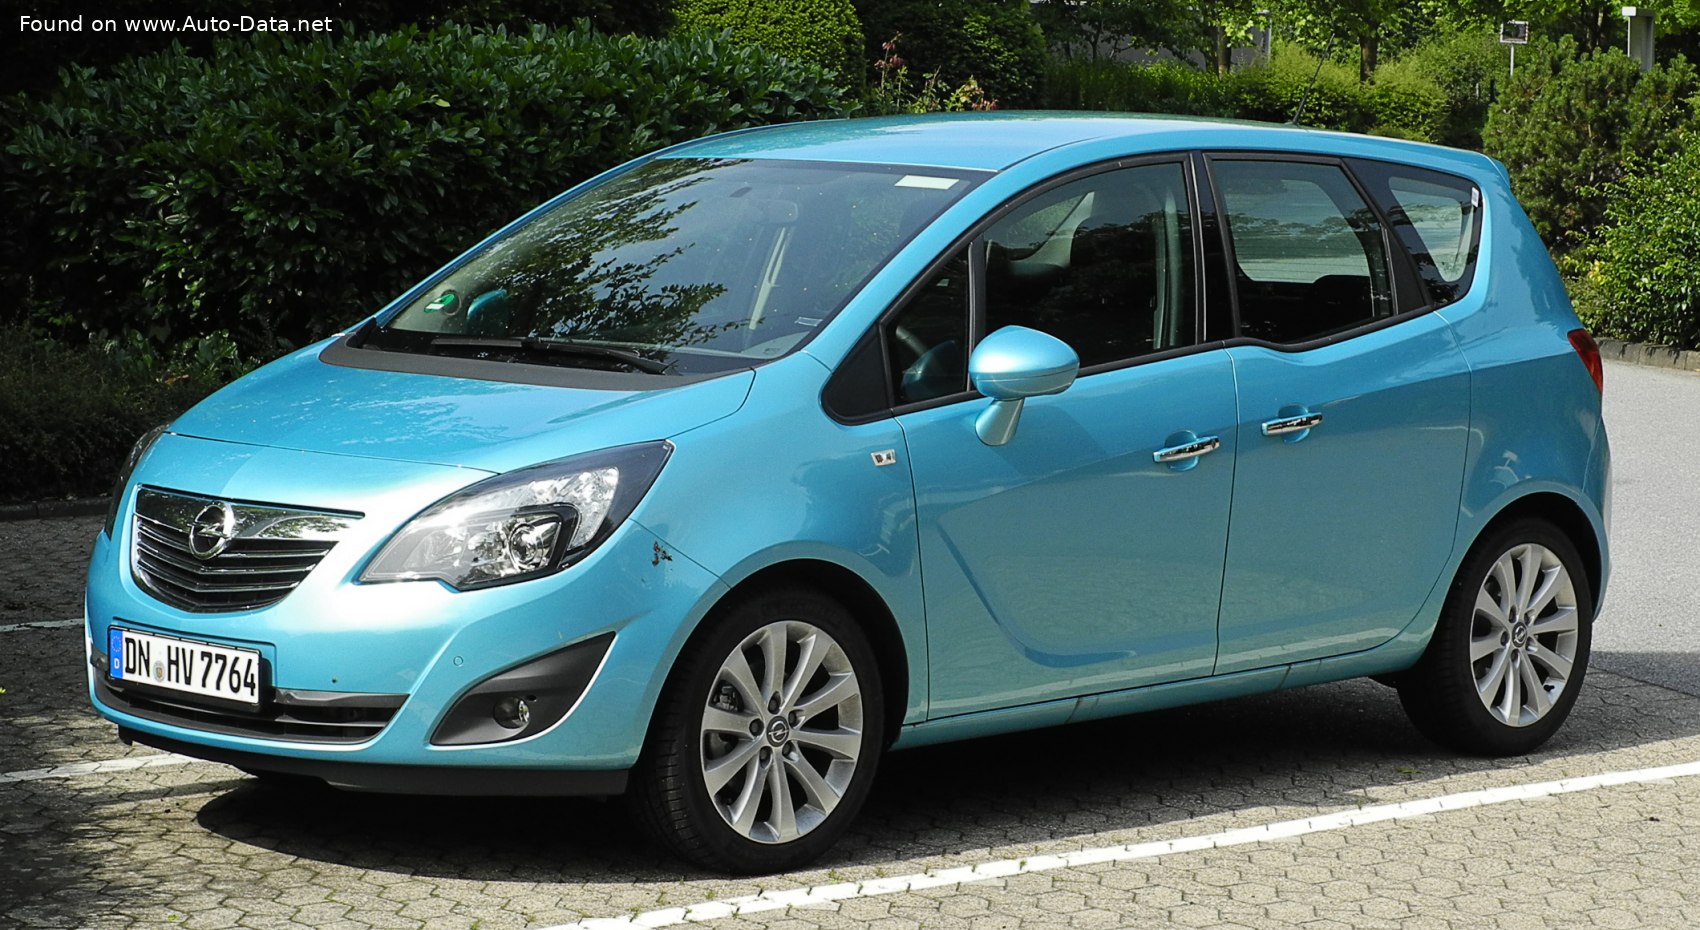 2010 Opel Meriva B 1.7 CDTI (110 Hp)  Technical specs, data, fuel  consumption, Dimensions